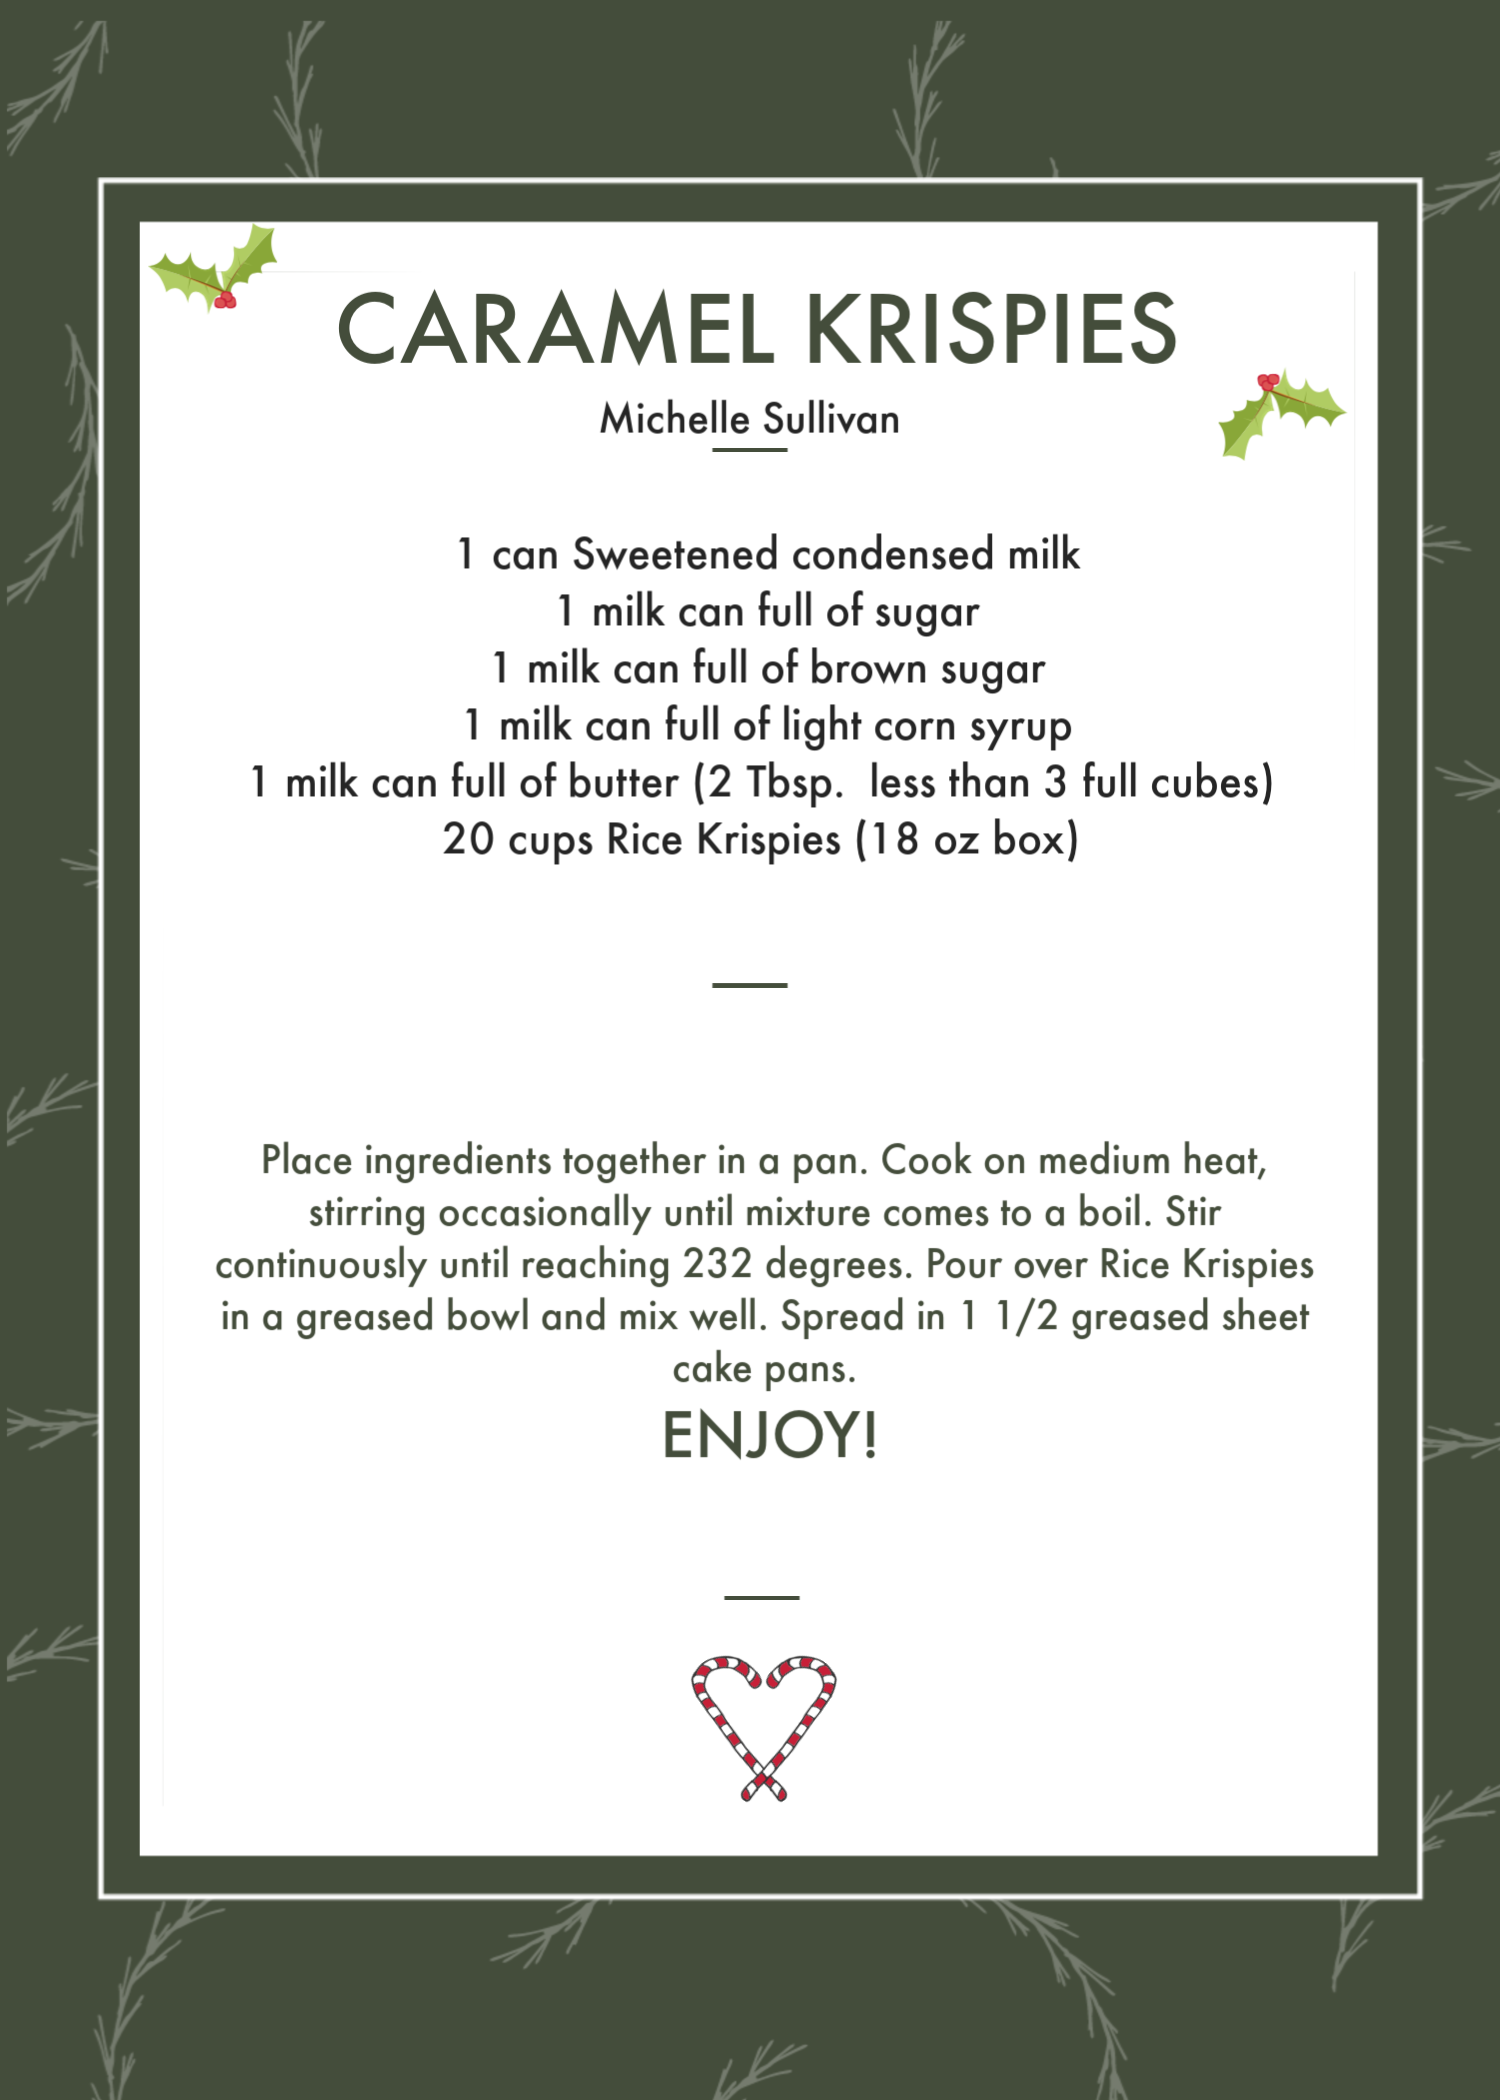 Carmel Krispies